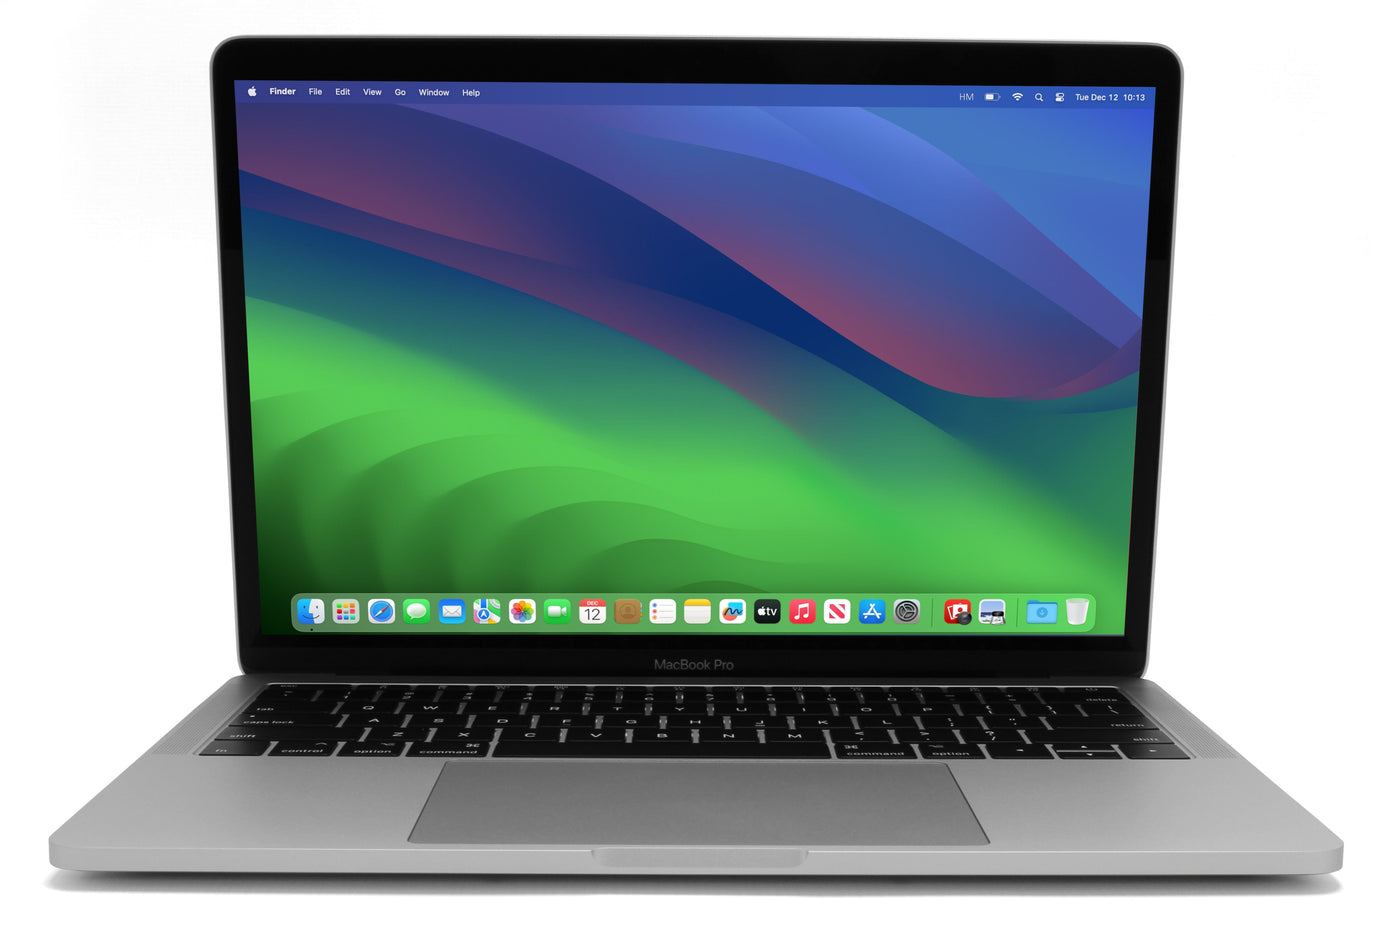 Apple MacBook Pro 13-inch MacBook Pro 13-inch Core i7 2.8GHz (Silver, 2019) - Good